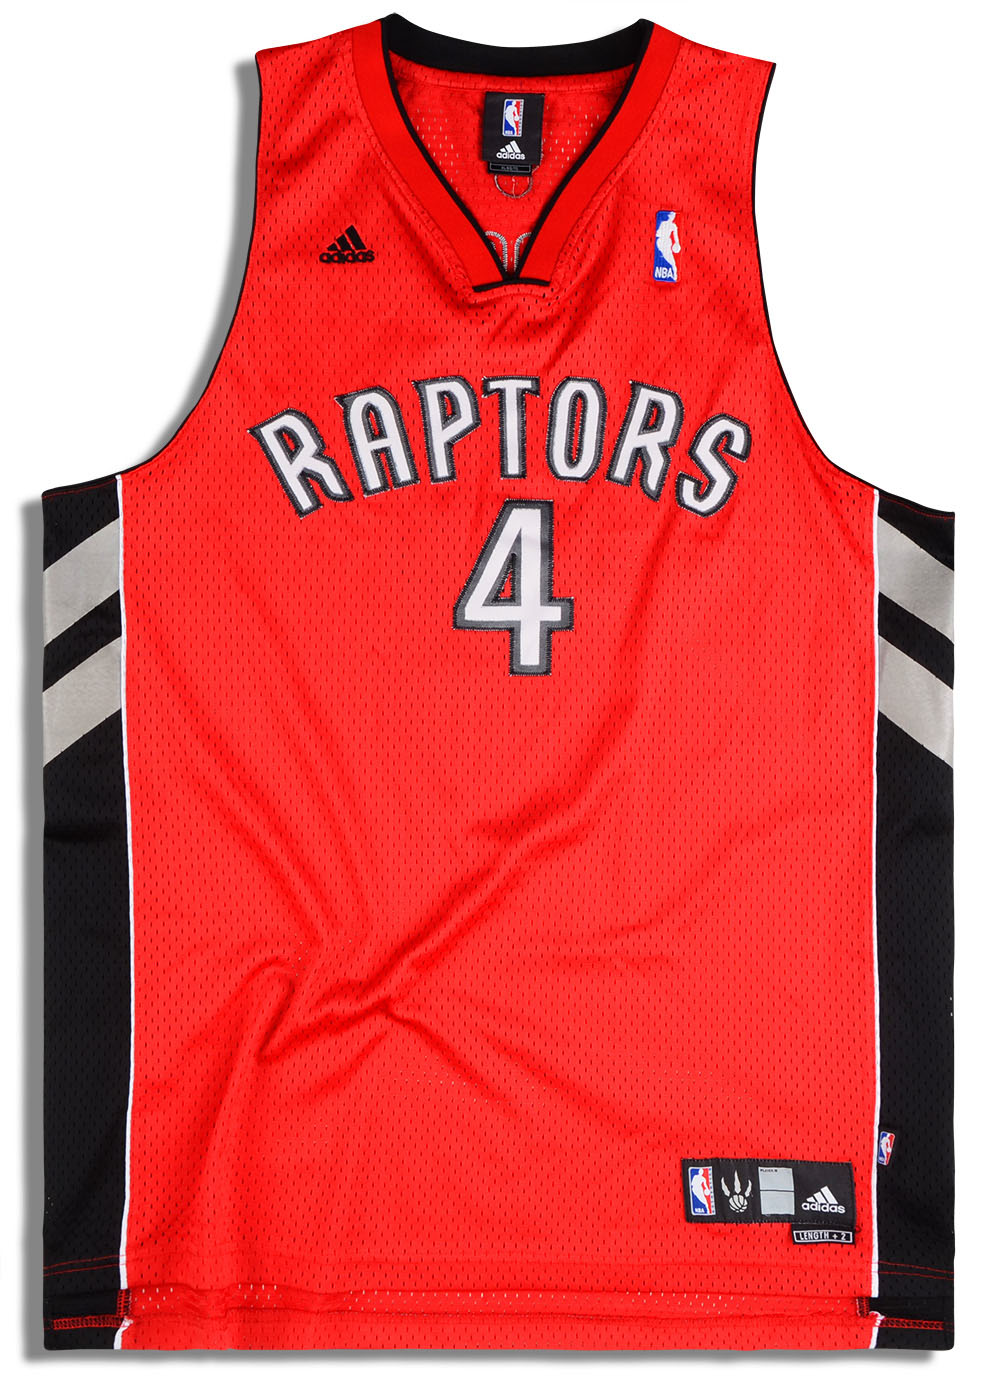 NBA Toronto Raptors Adidas Replica Jerseys